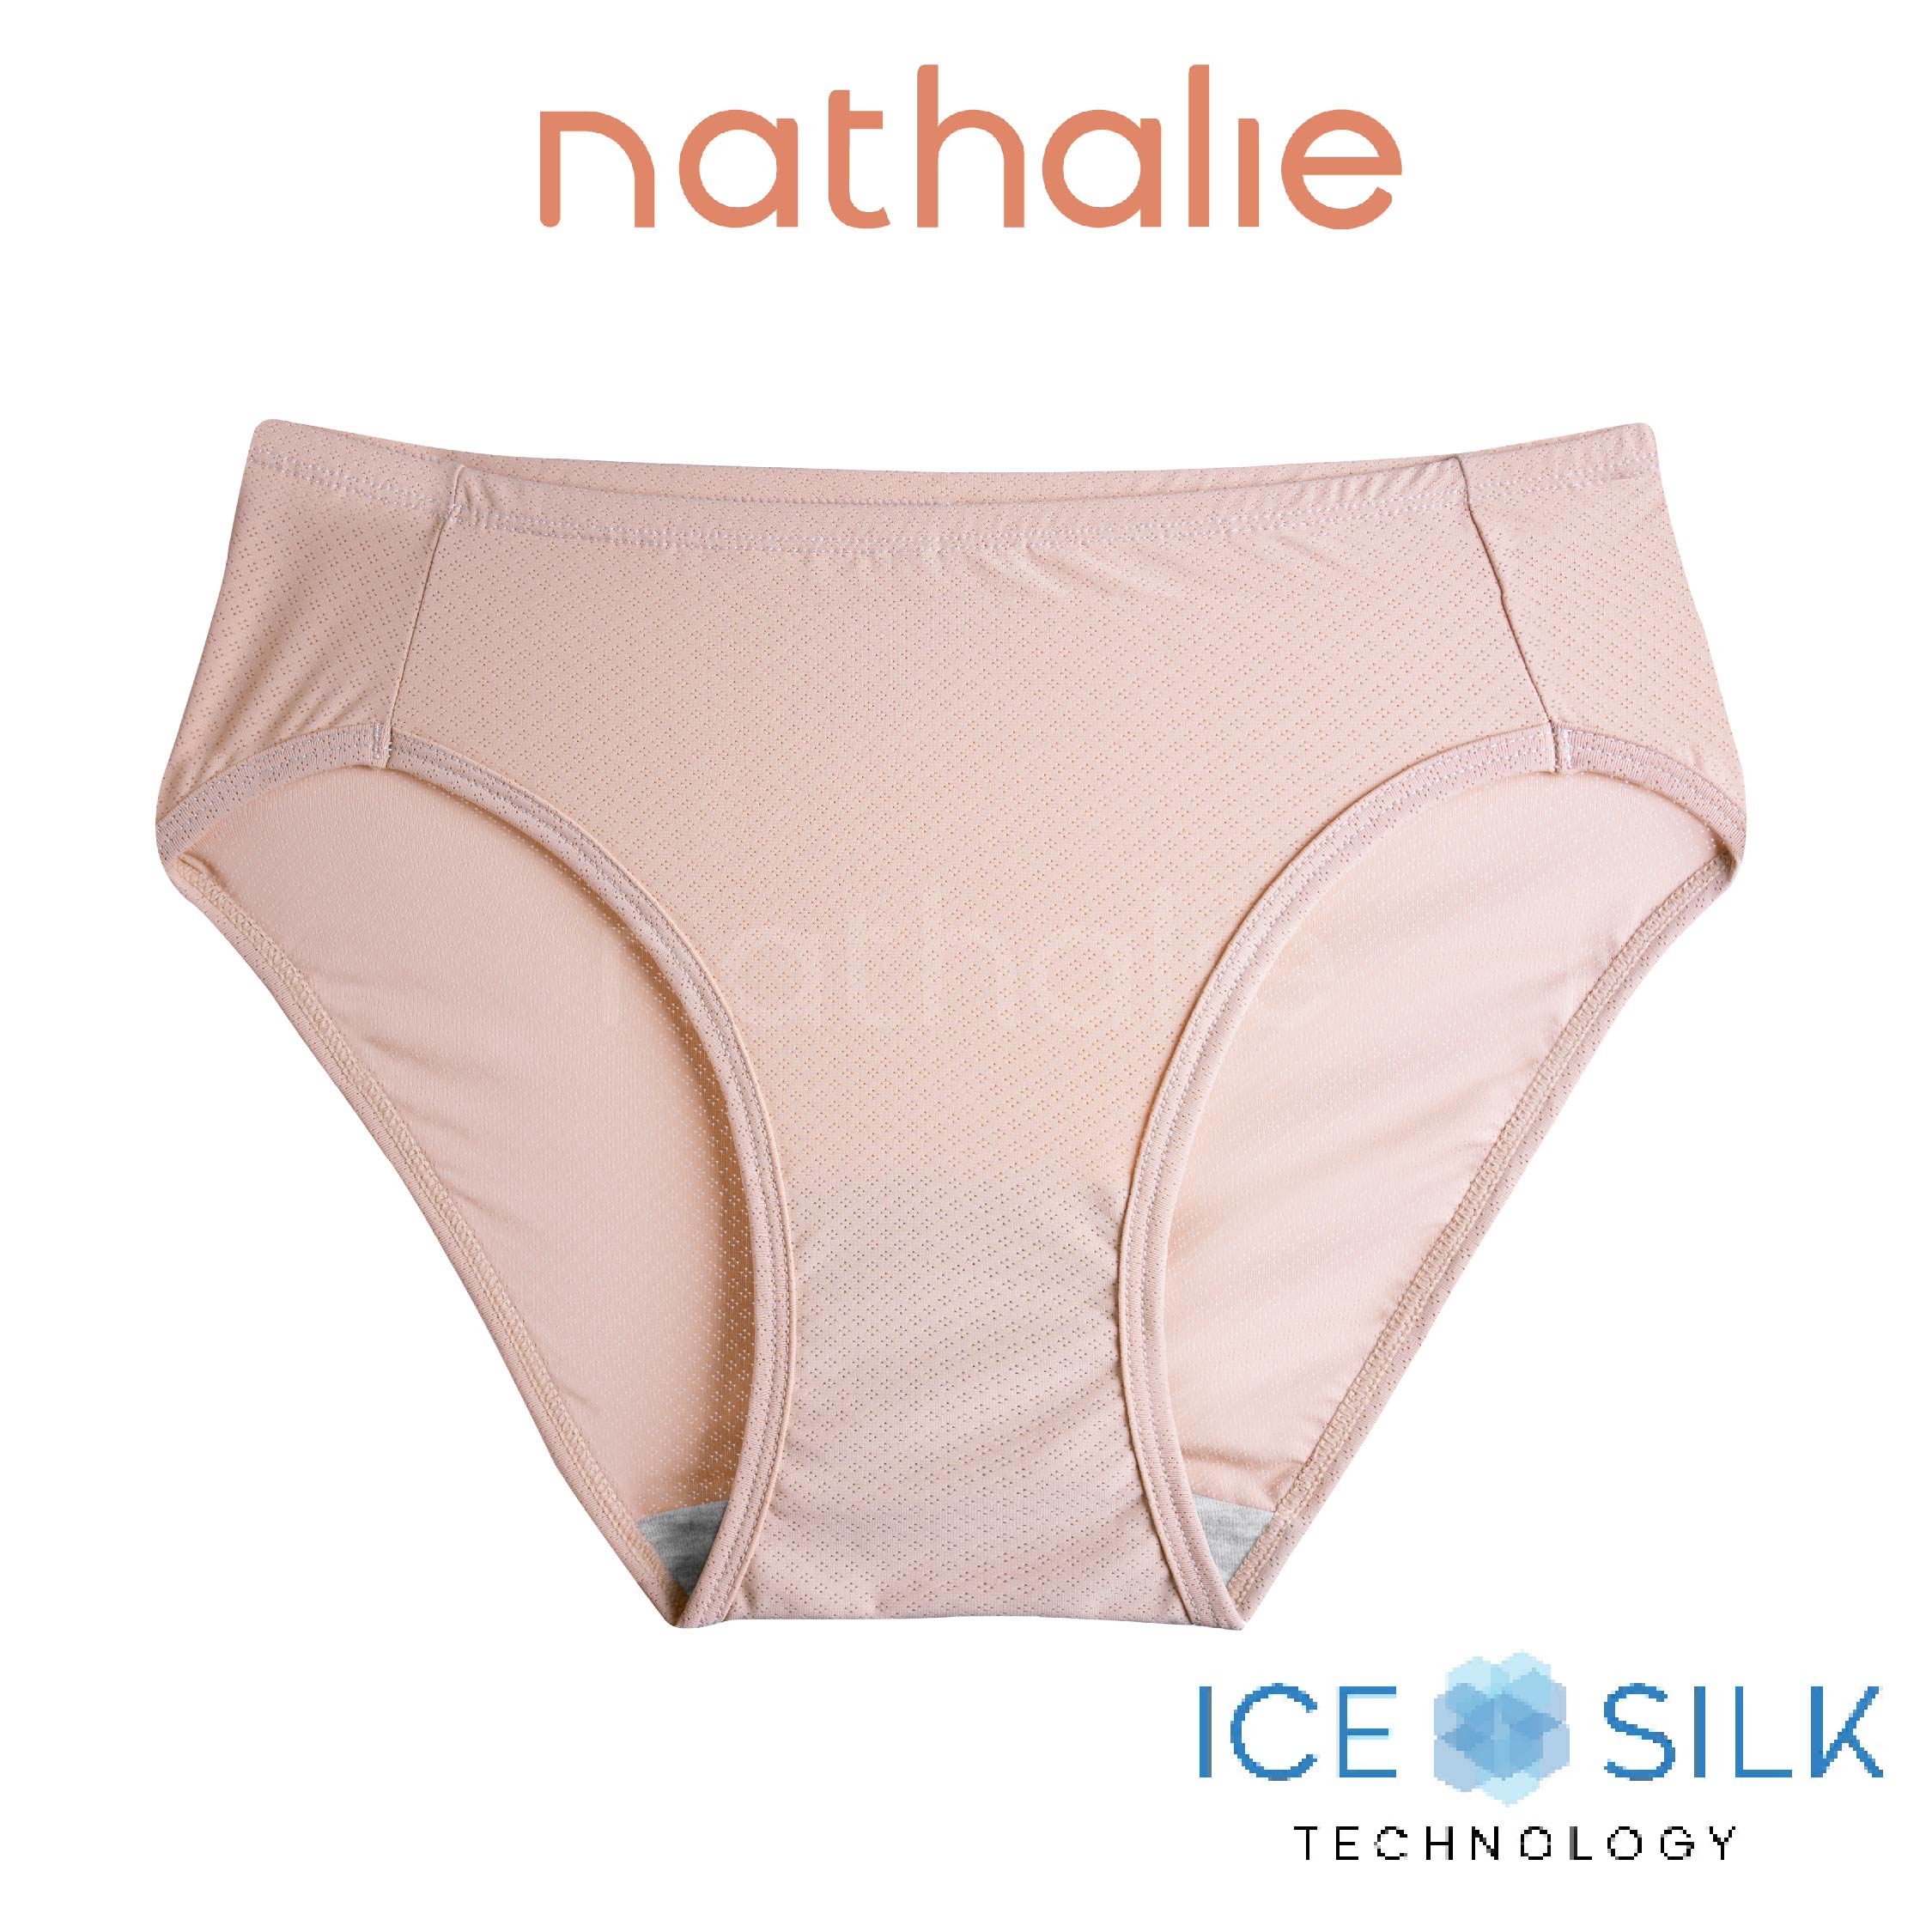 Nathalie Celana Dalam Wanita High Cut Ice Silk Panty CD Cewek Clana Dalem Quick Dry Panties 3 pcs NTC 3486